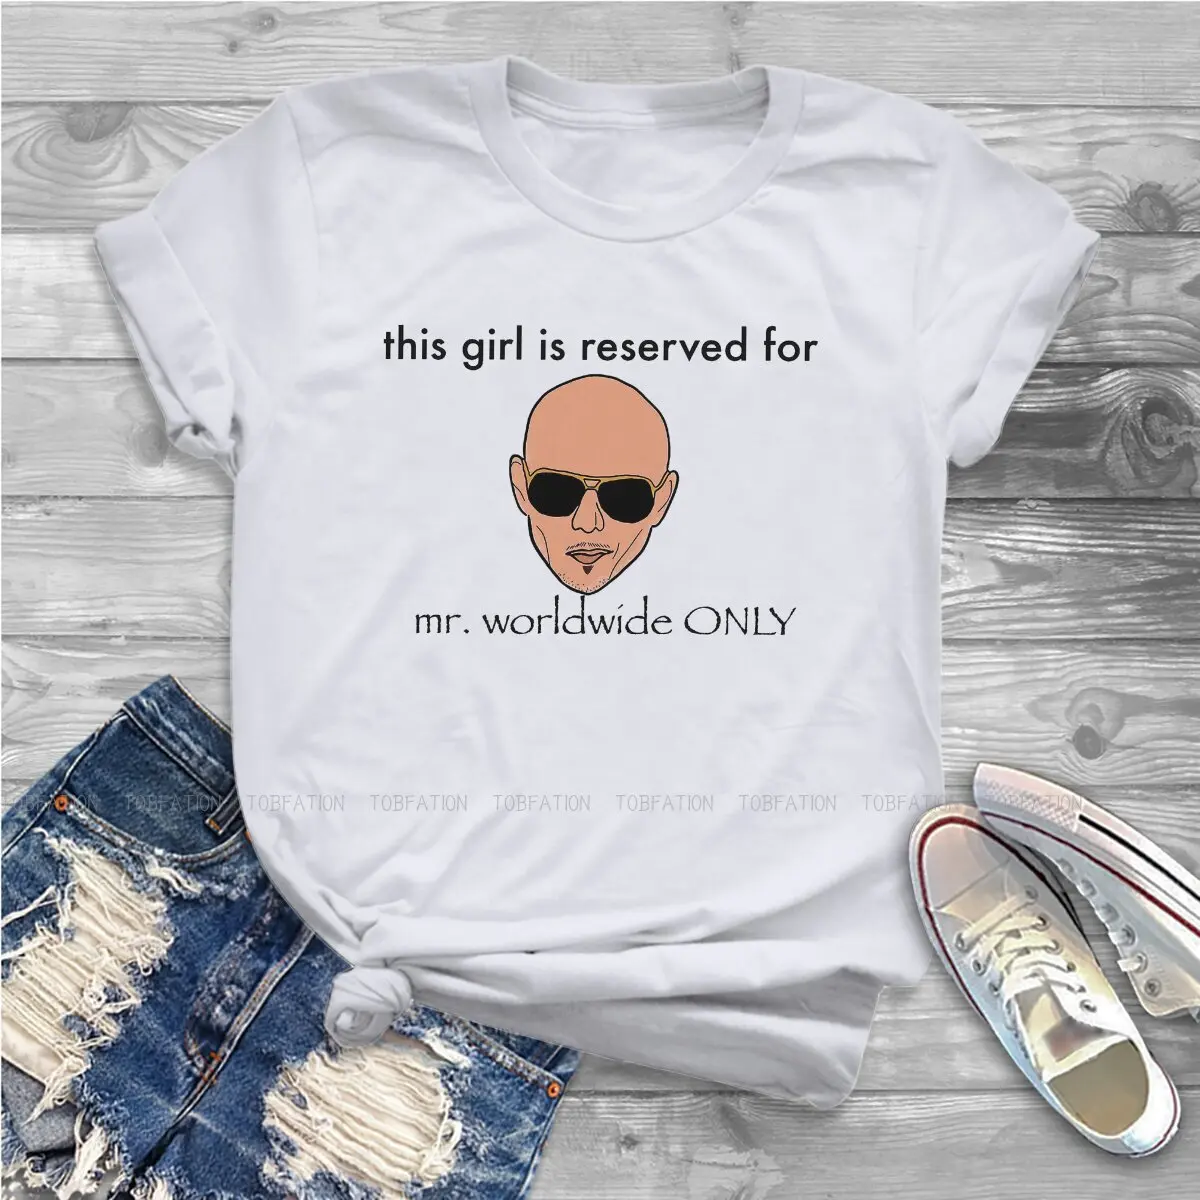 Mr Worldwide Pitbull TShirt for Woman Girl Cool 5XL Casual Tee T Shirt New  Design Loose